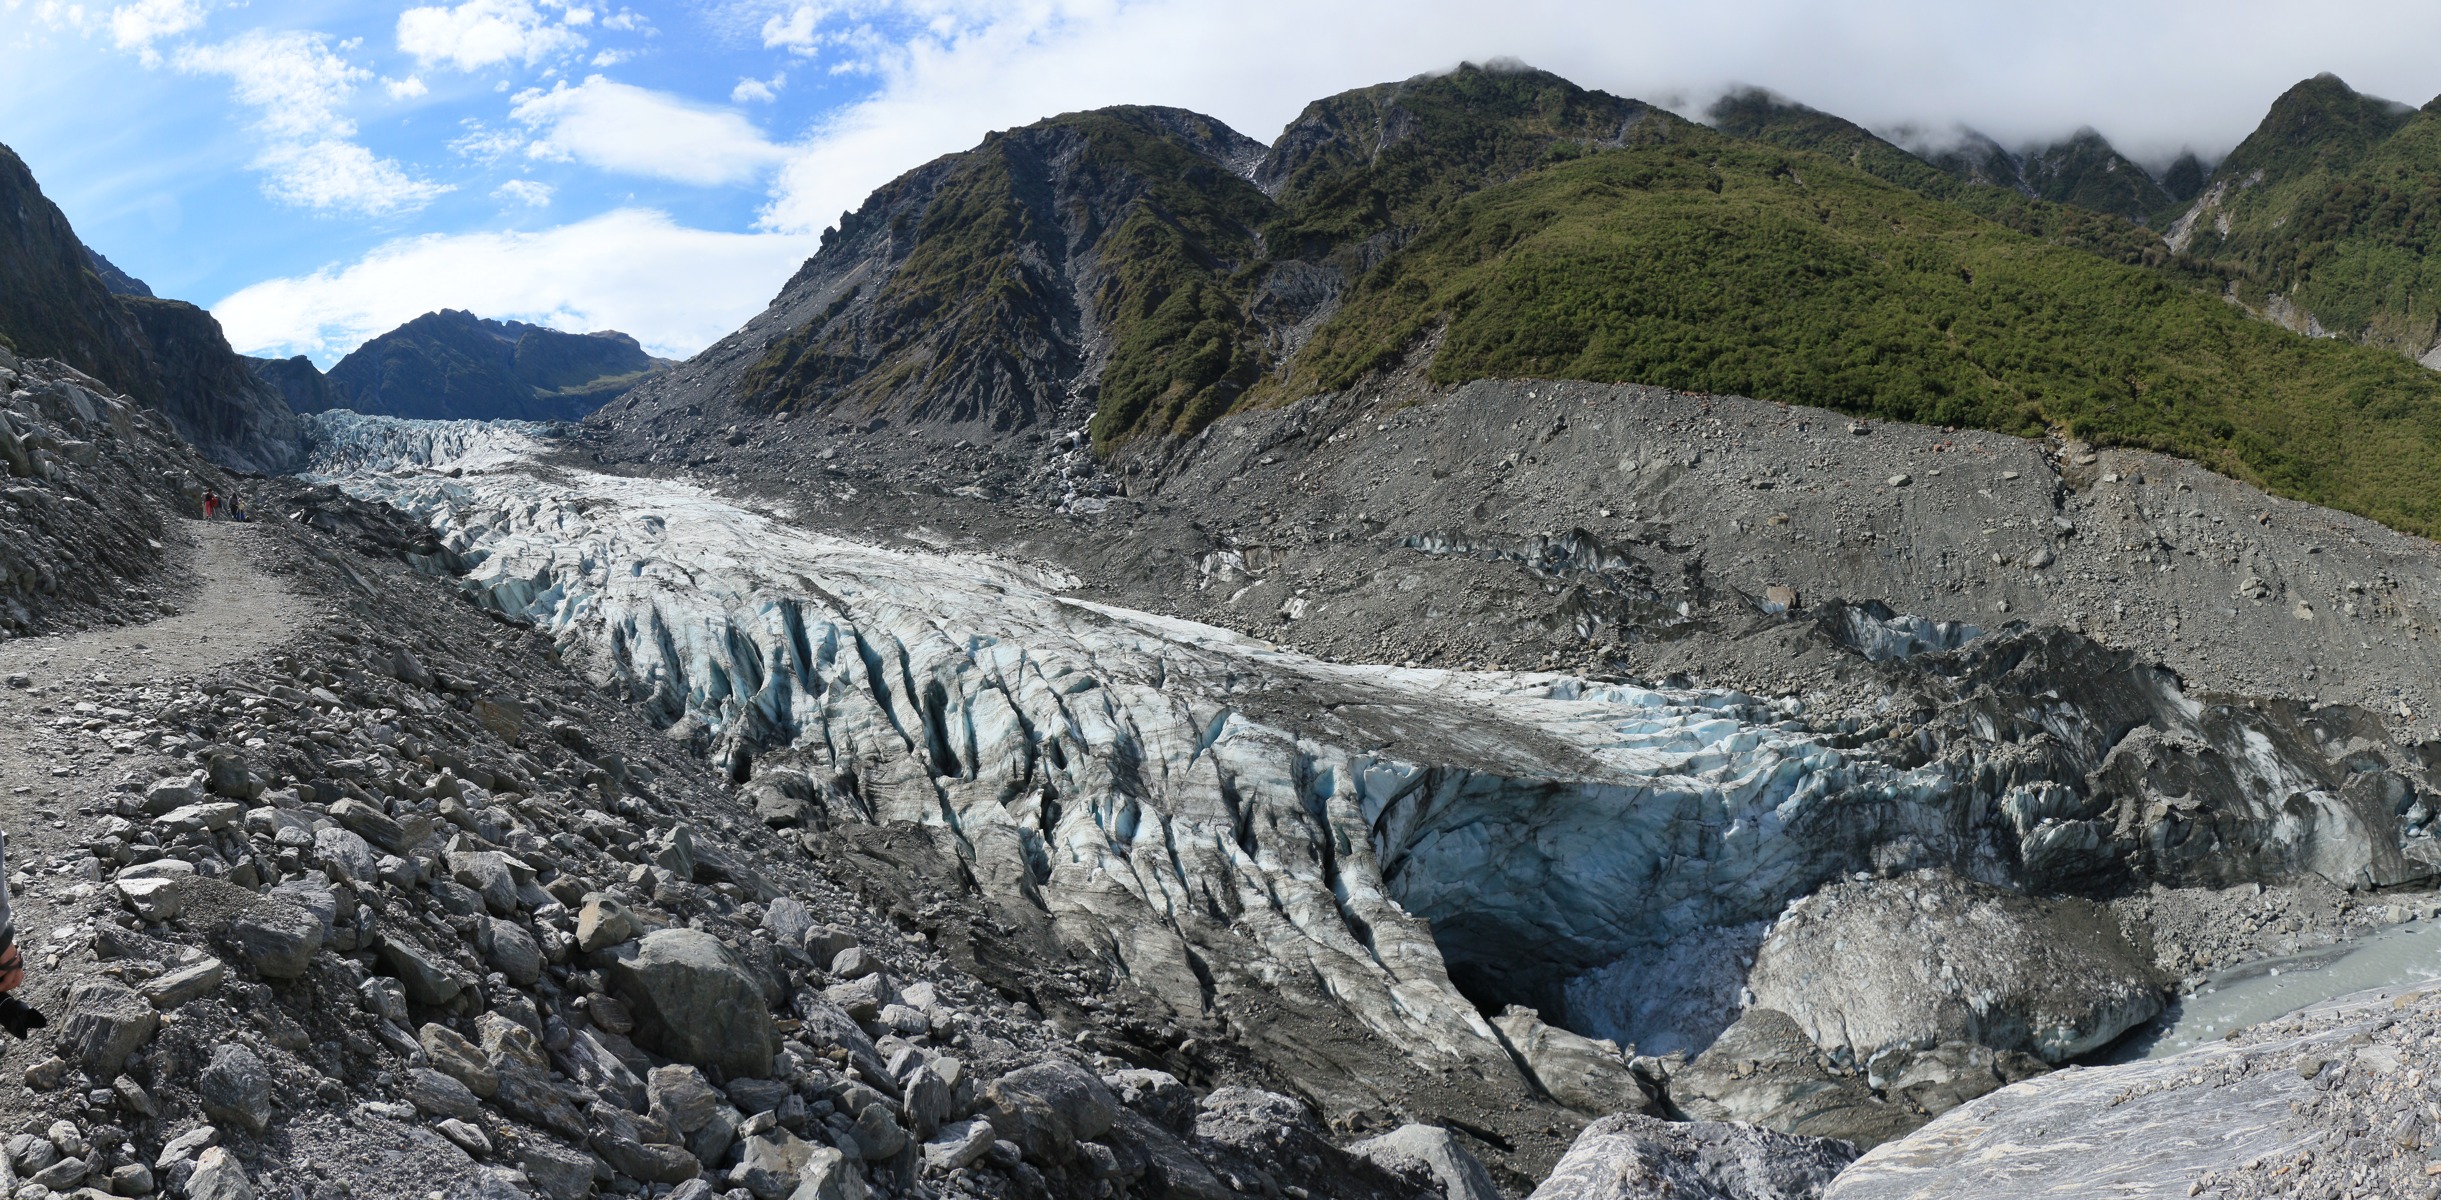 E48400_-_Lower_part_of_Fox_Glacier_with_glacier_mouth,_February_2013